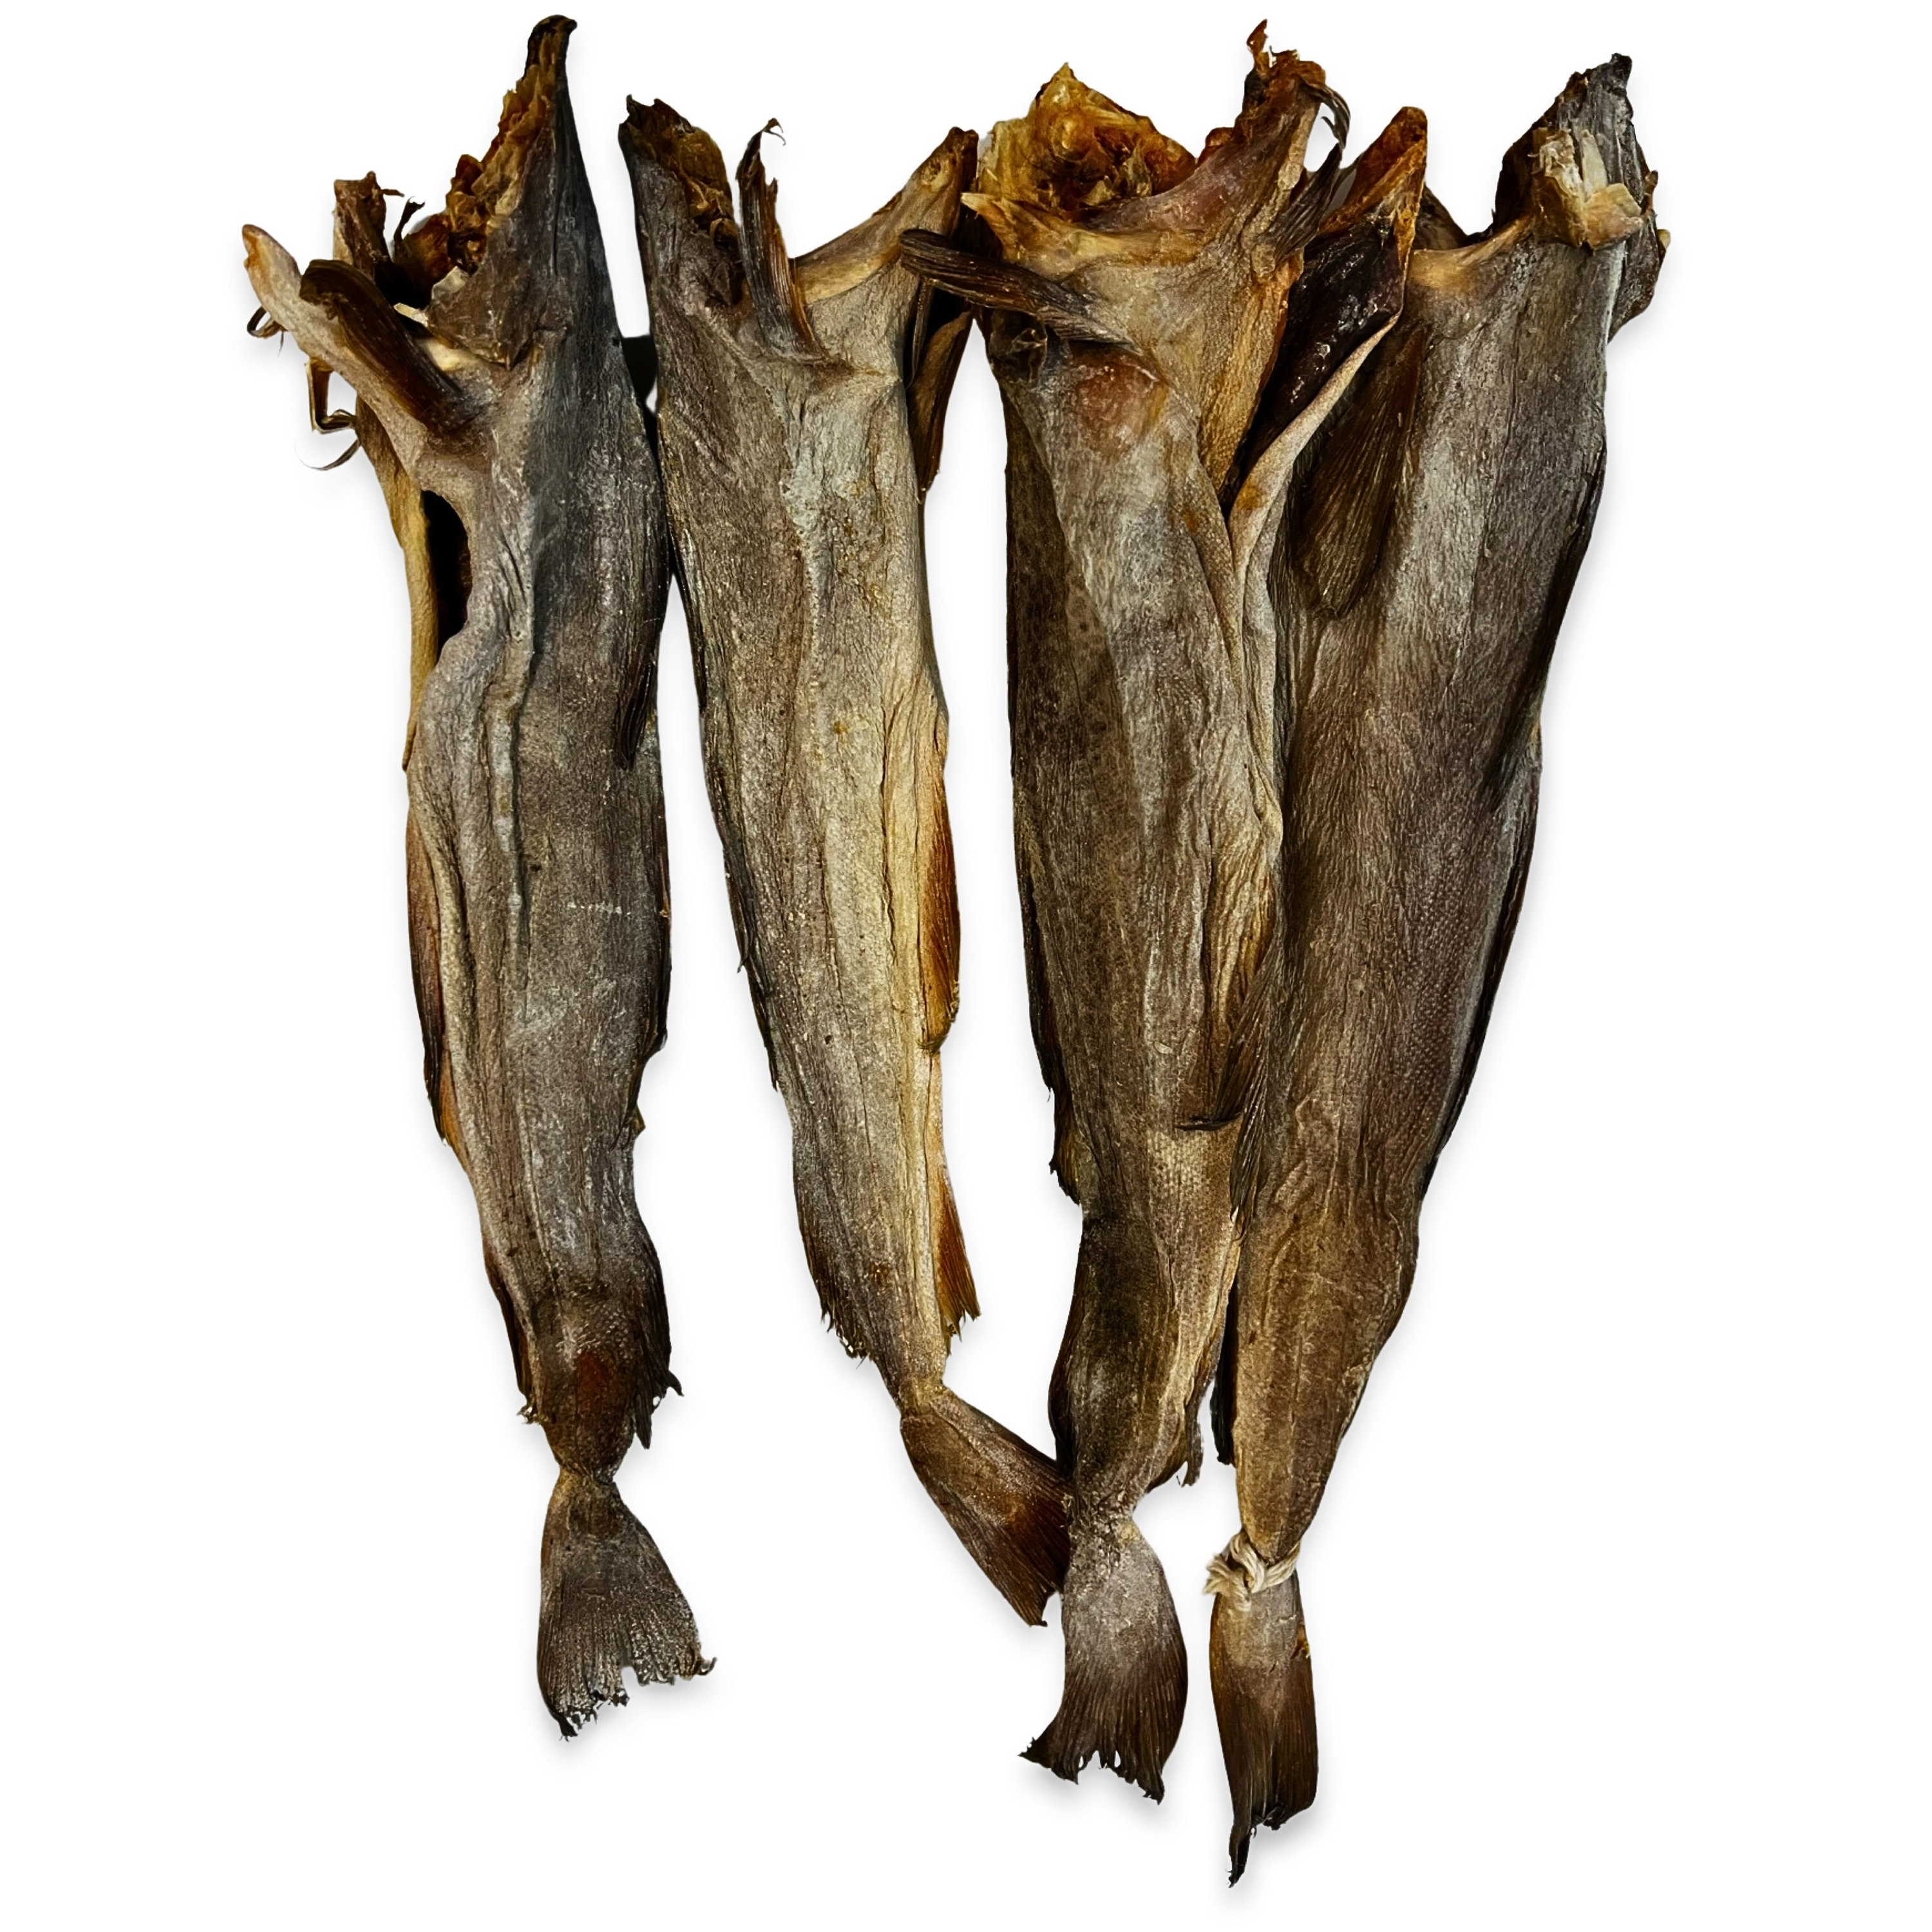 Stockfish (Fillet Pieces)